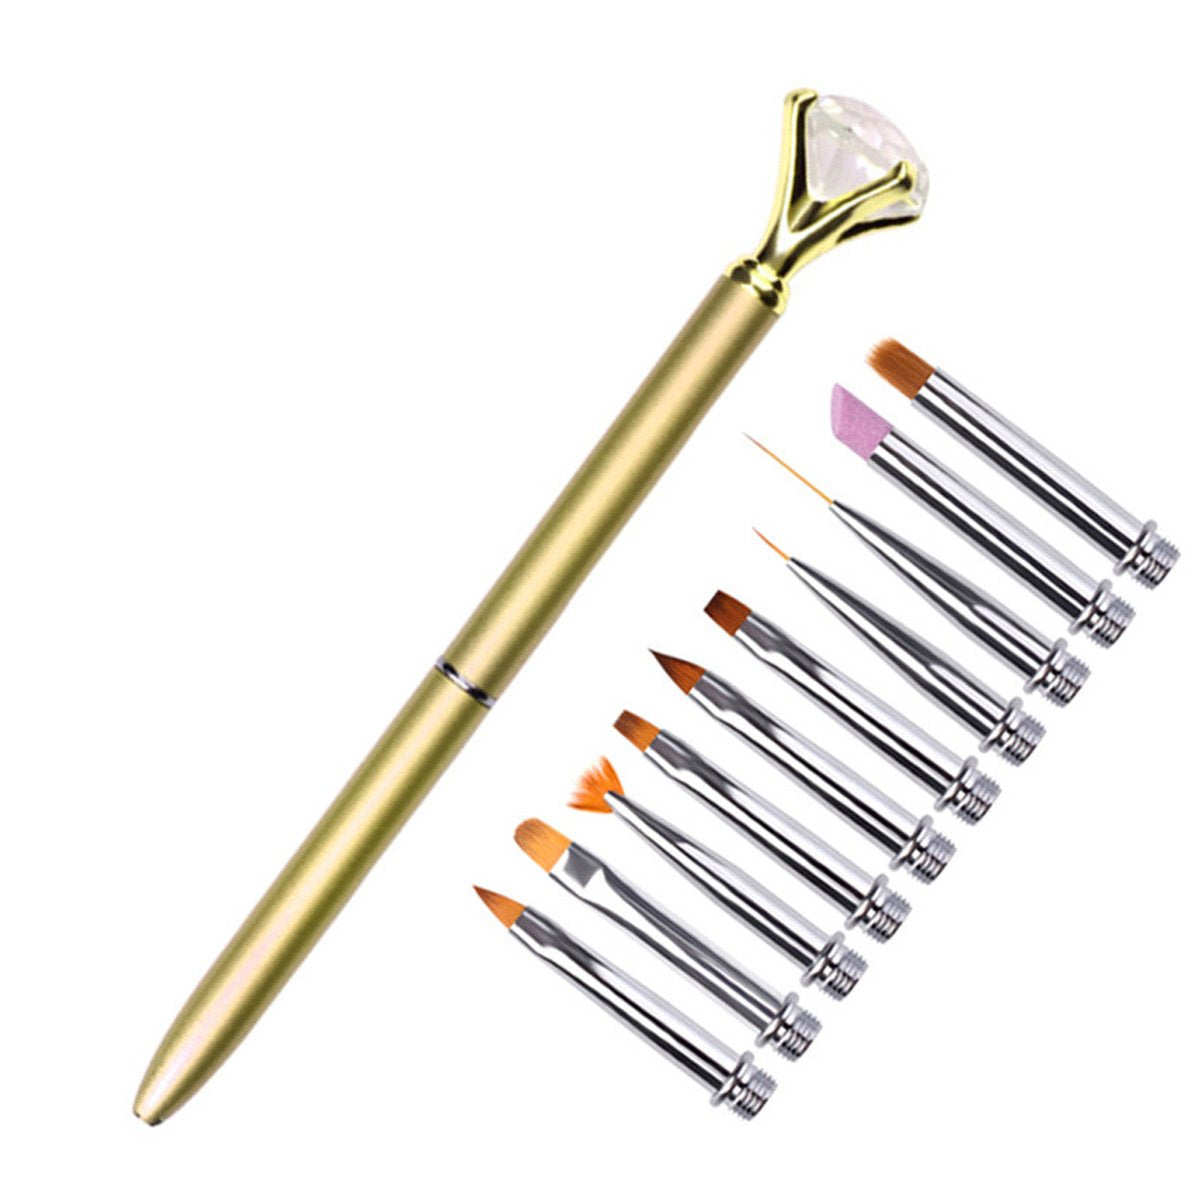 Full Functioning Nail Art Brushes Pen Quartz Rhinestone Gold Silver Handle Design Replaceable Nail Special Crystal Pens Kit